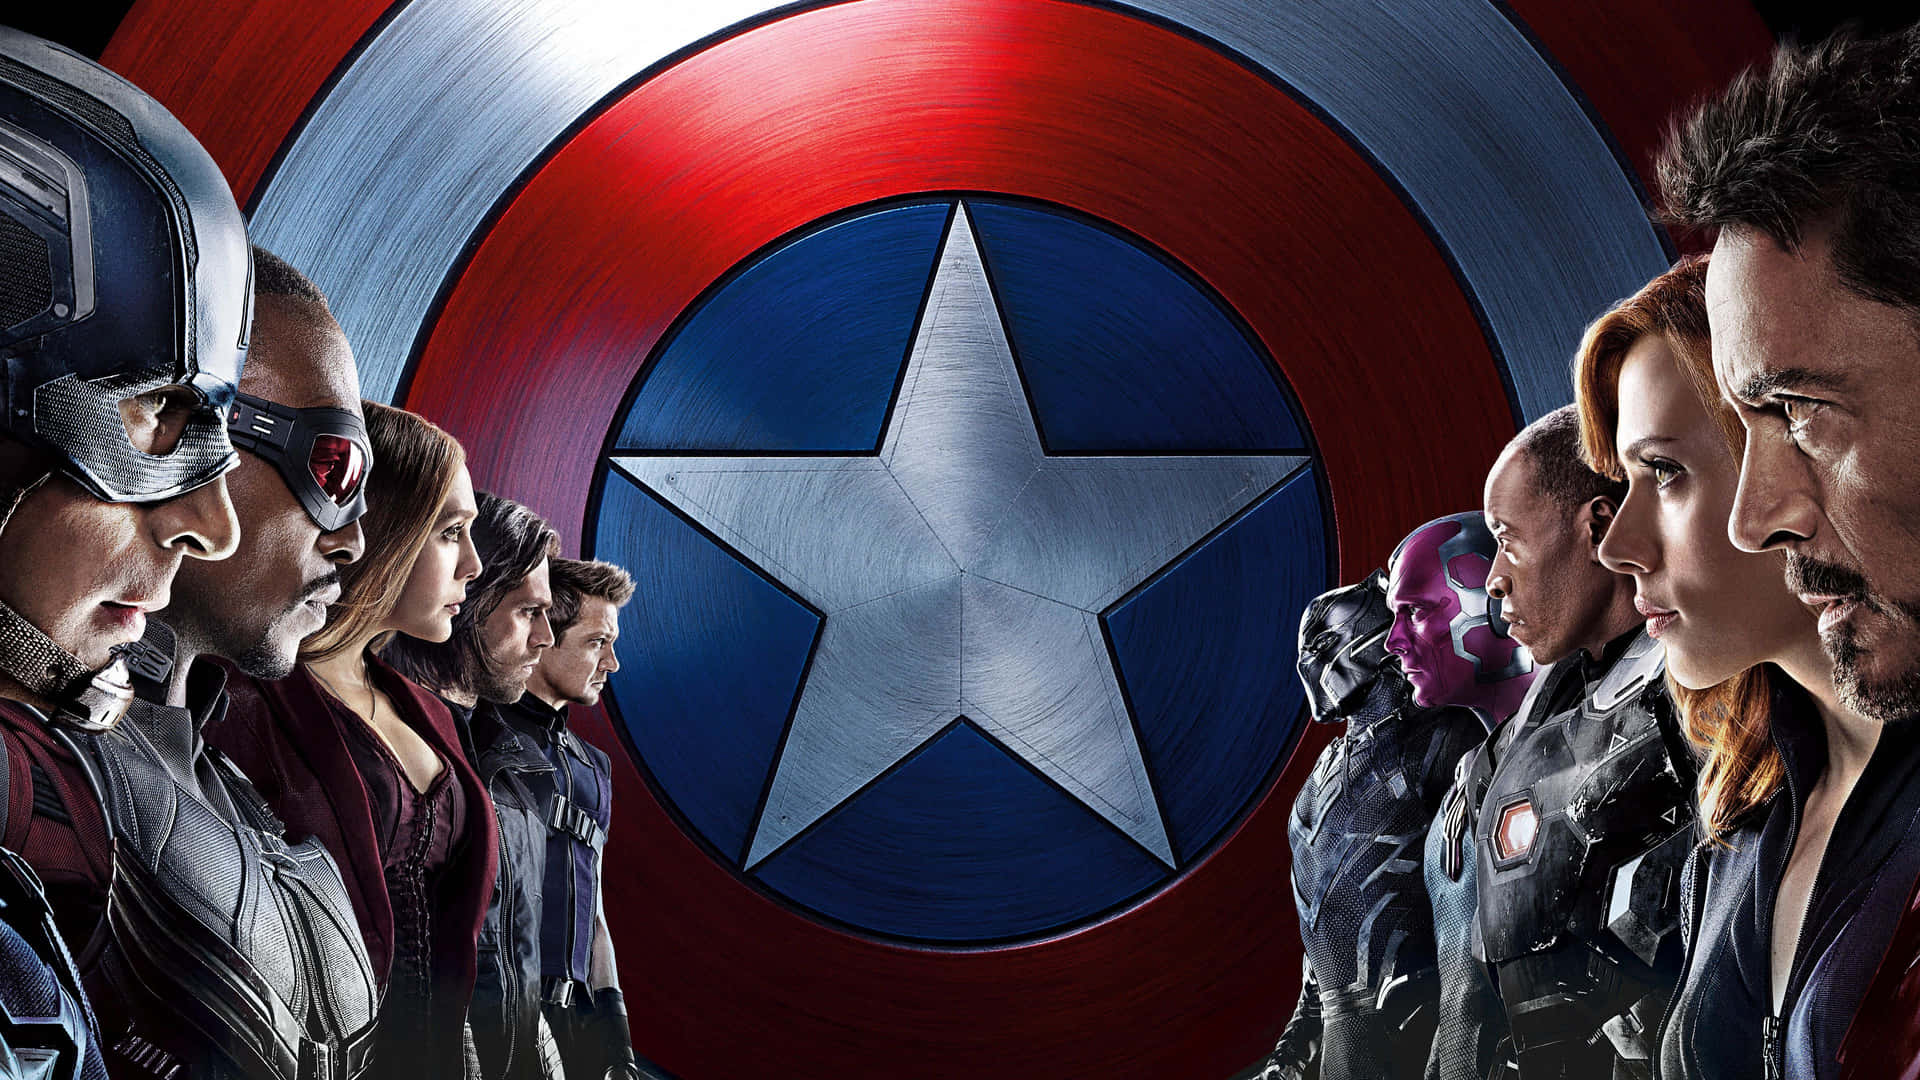 Battle of Legends - Iron Man vs Captain America Wallpaper